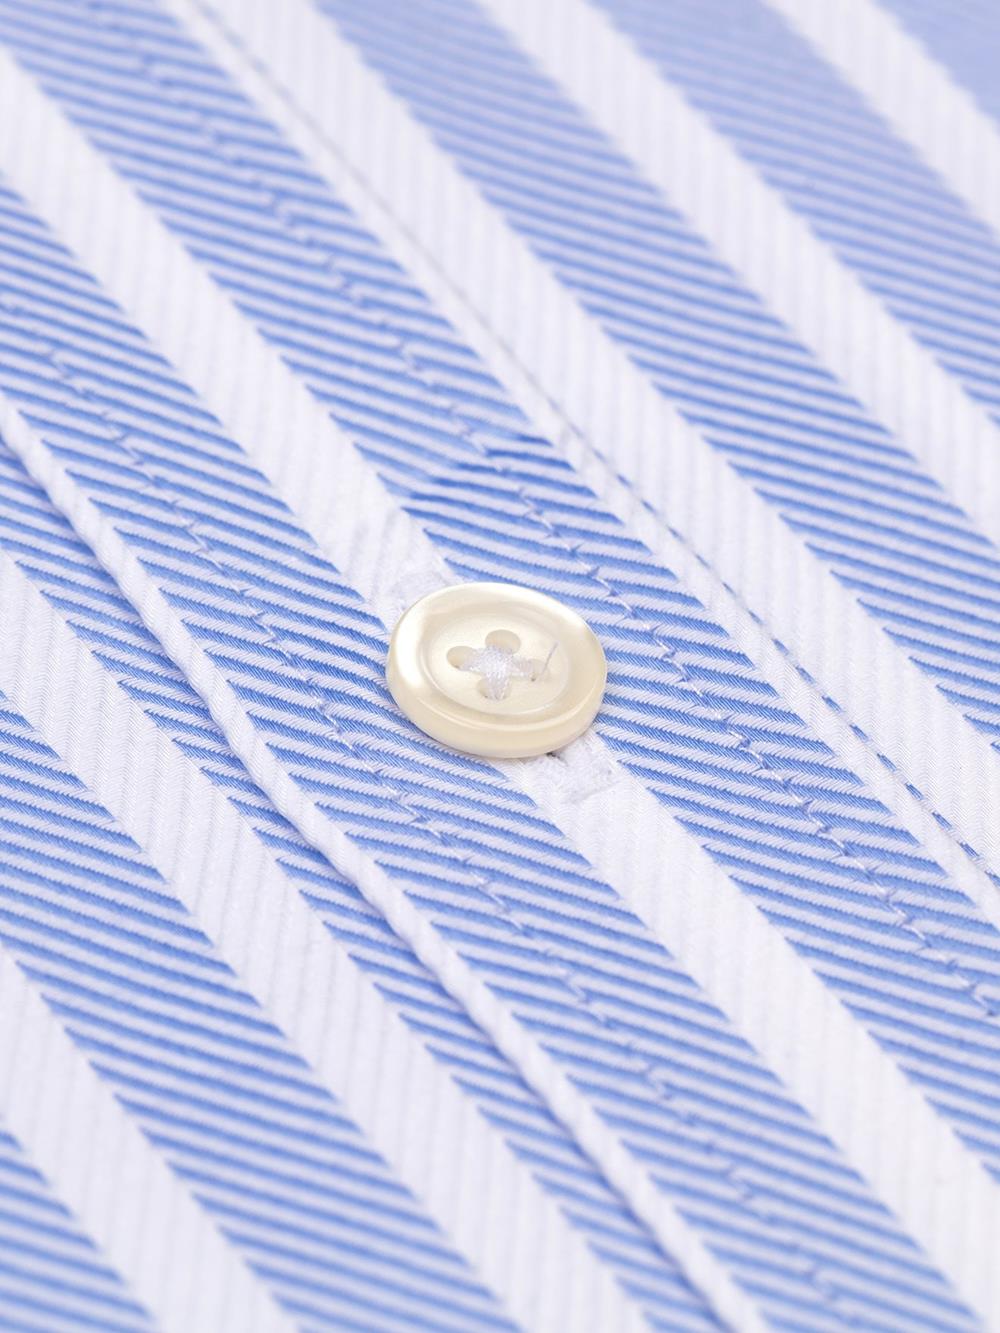 Don sky blue striped shirt - Button-down collar